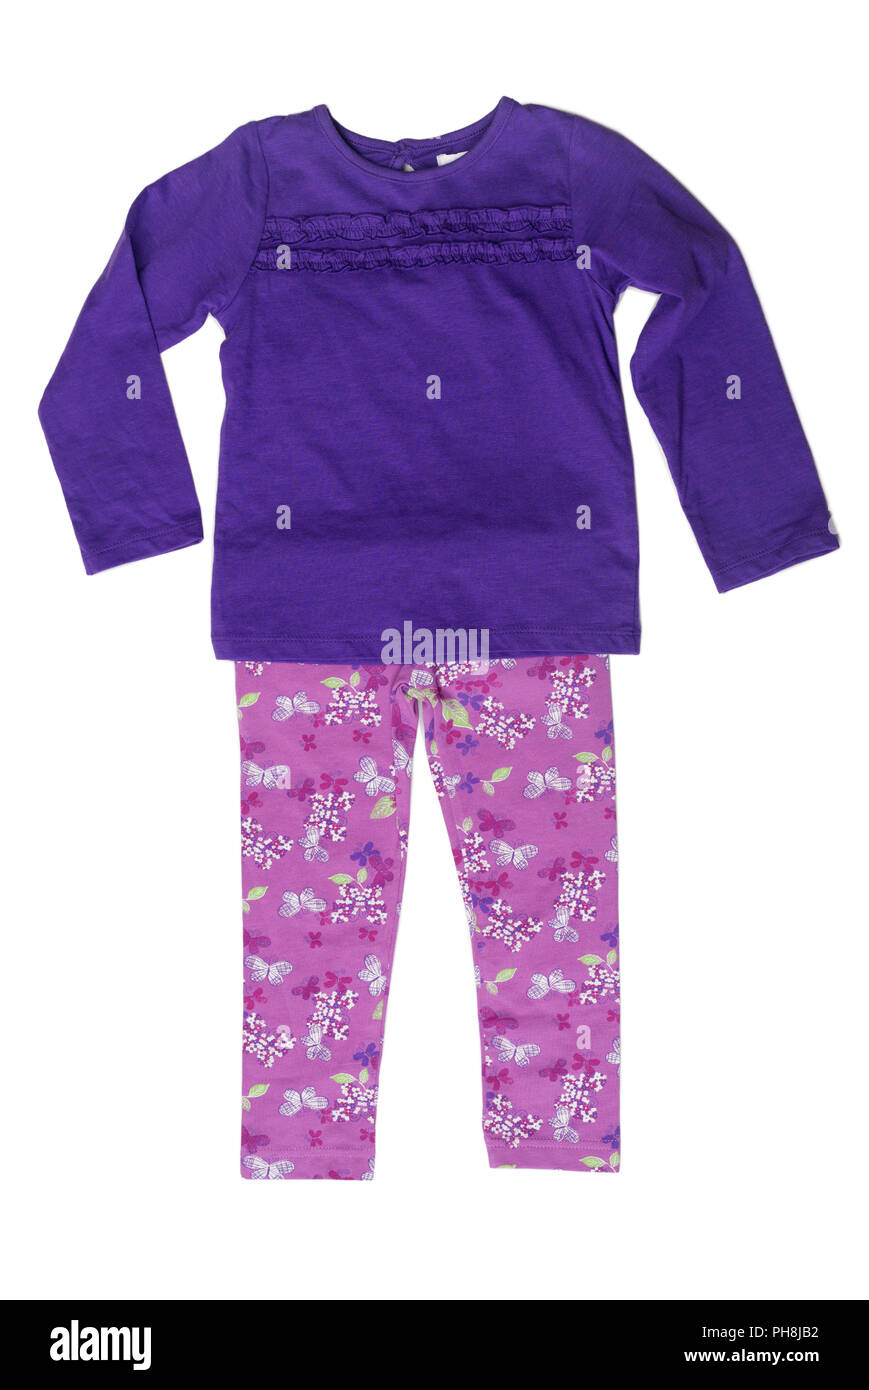 Purple pants suit Cut Out Stock Images & Pictures - Alamy